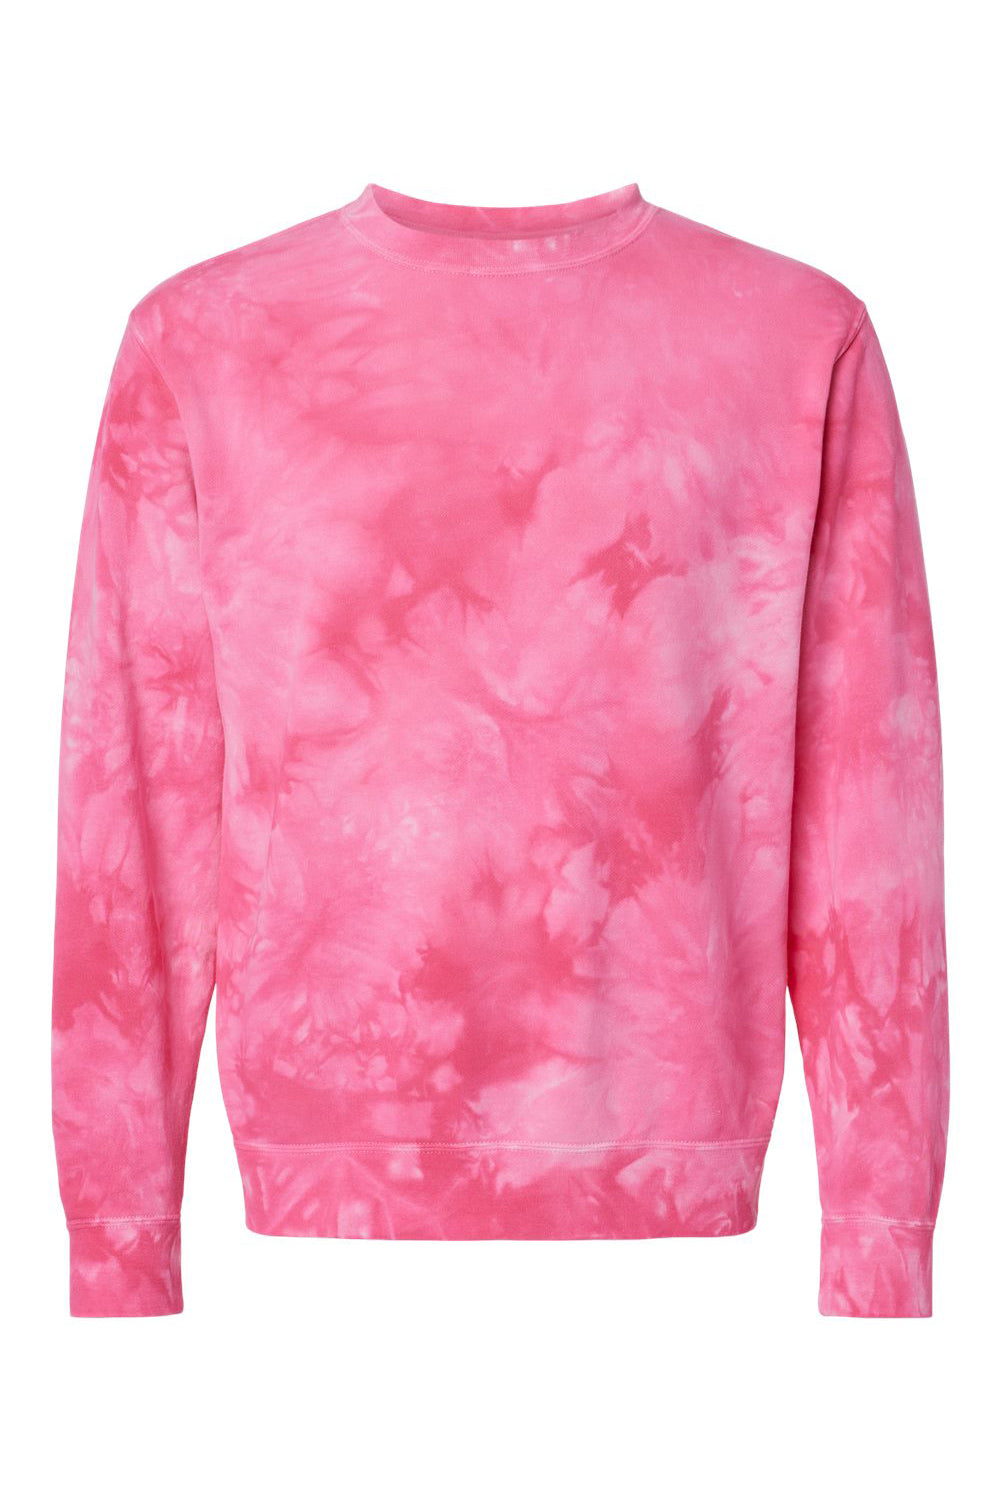 Independent Trading Co. PRM3500TD Mens Tie-Dye Crewneck Sweatshirt Pink Flat Front